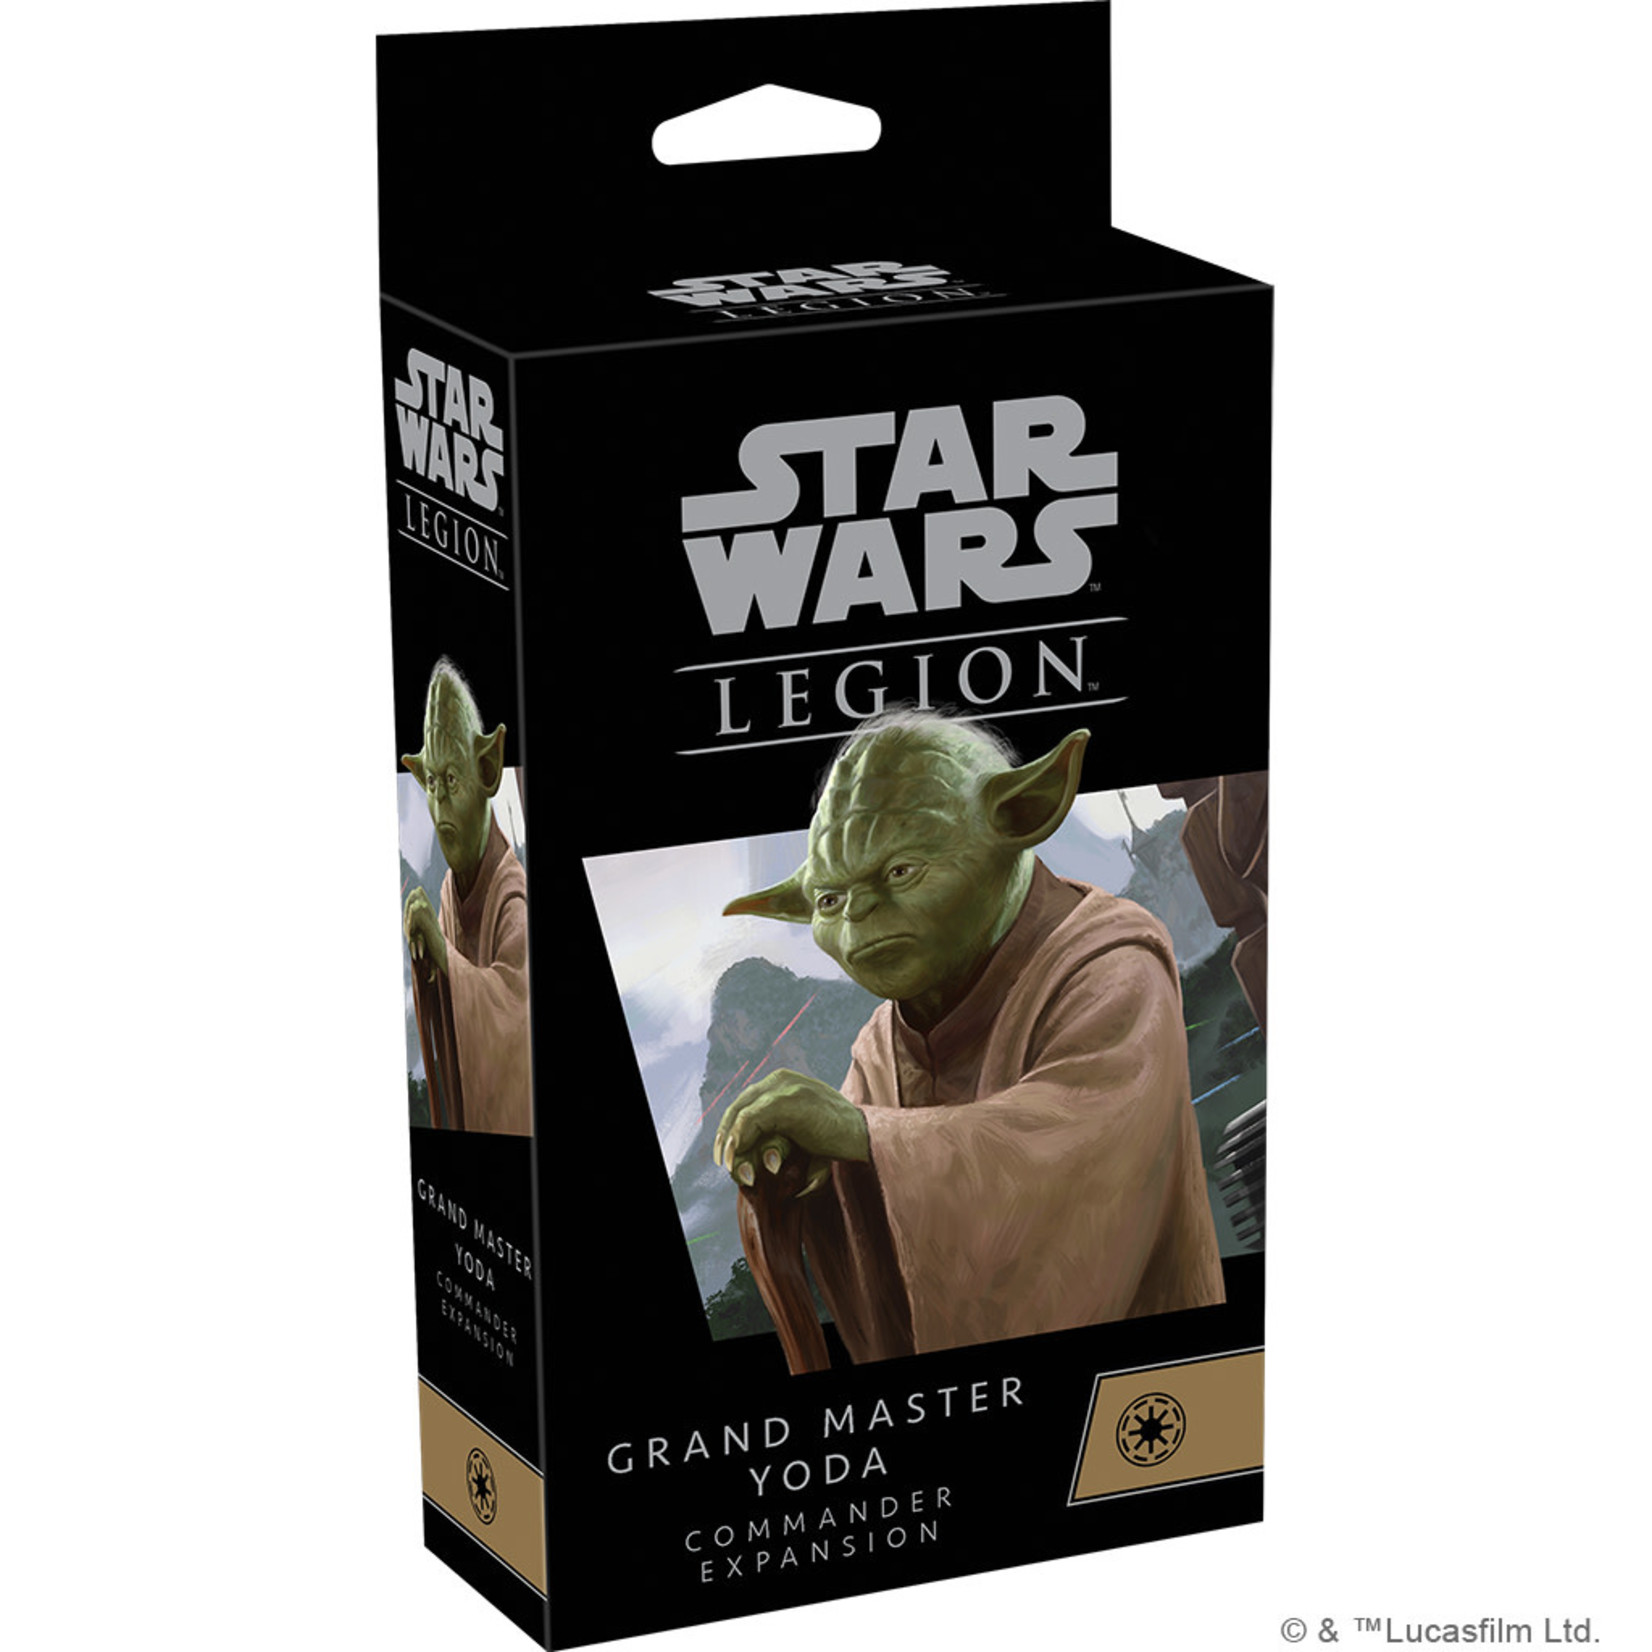 Star Wars Legion: Grand Master Yoda Expansion